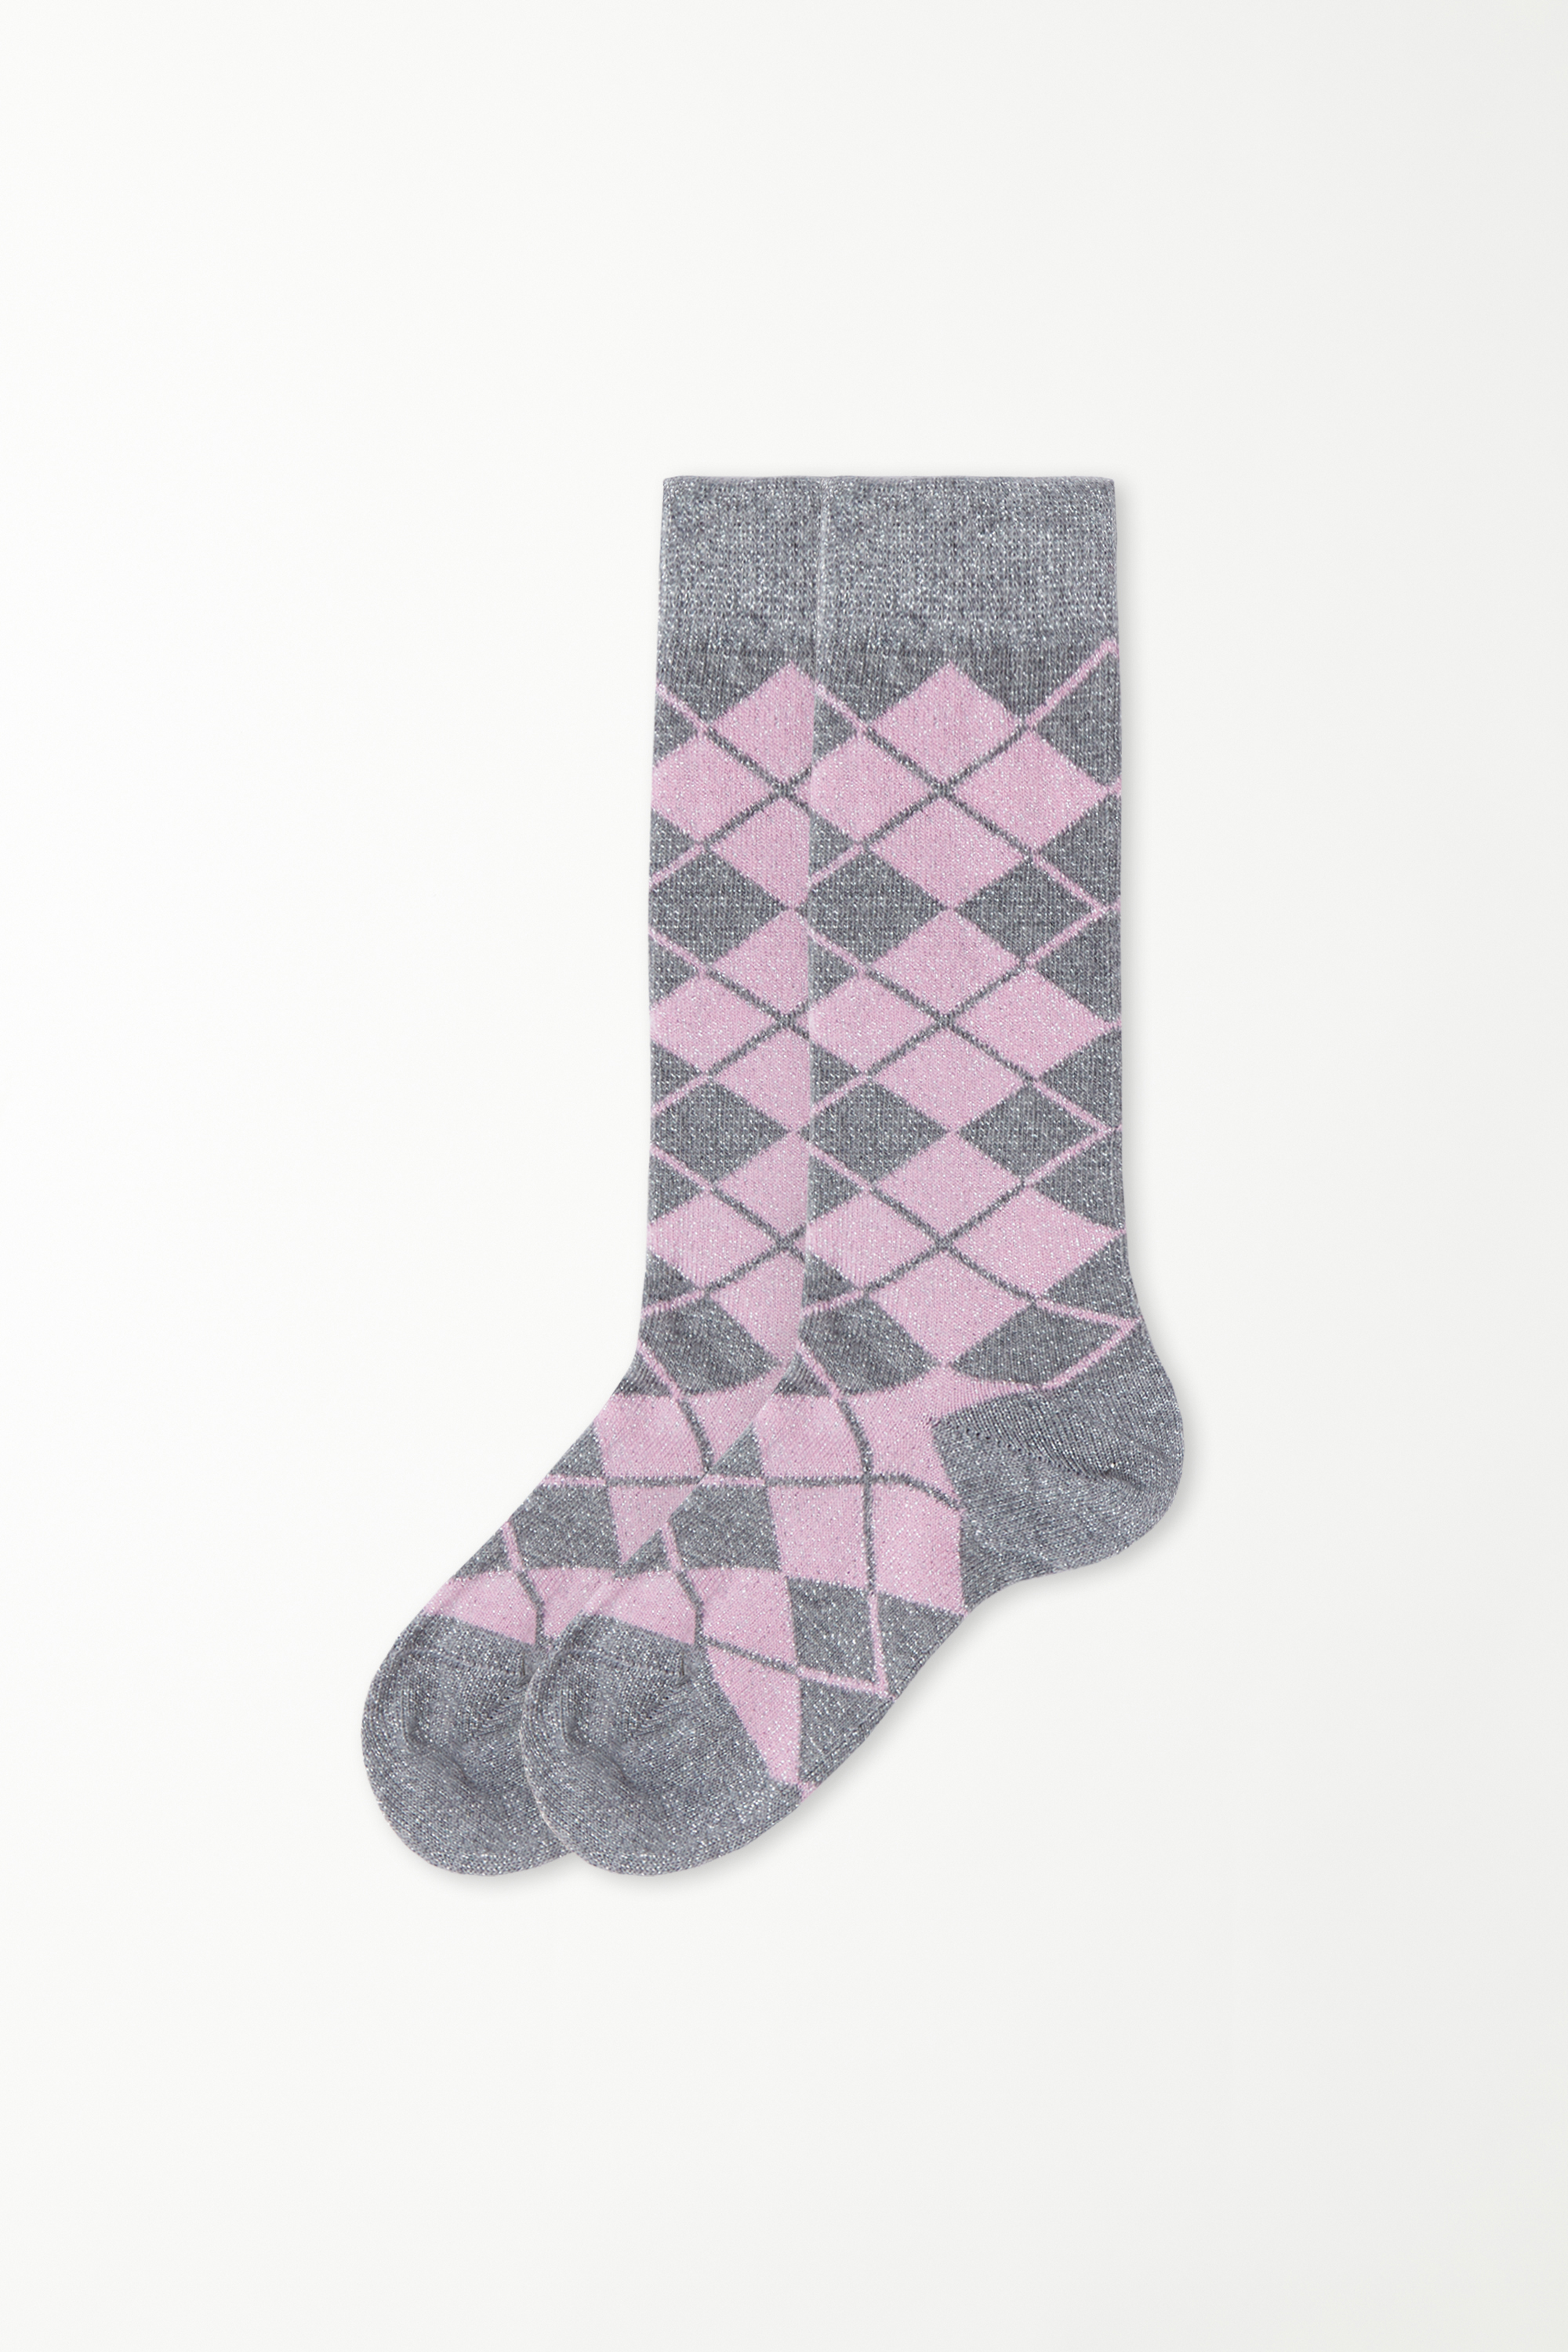 Girls’ Long Laminated Diamond Print Socks